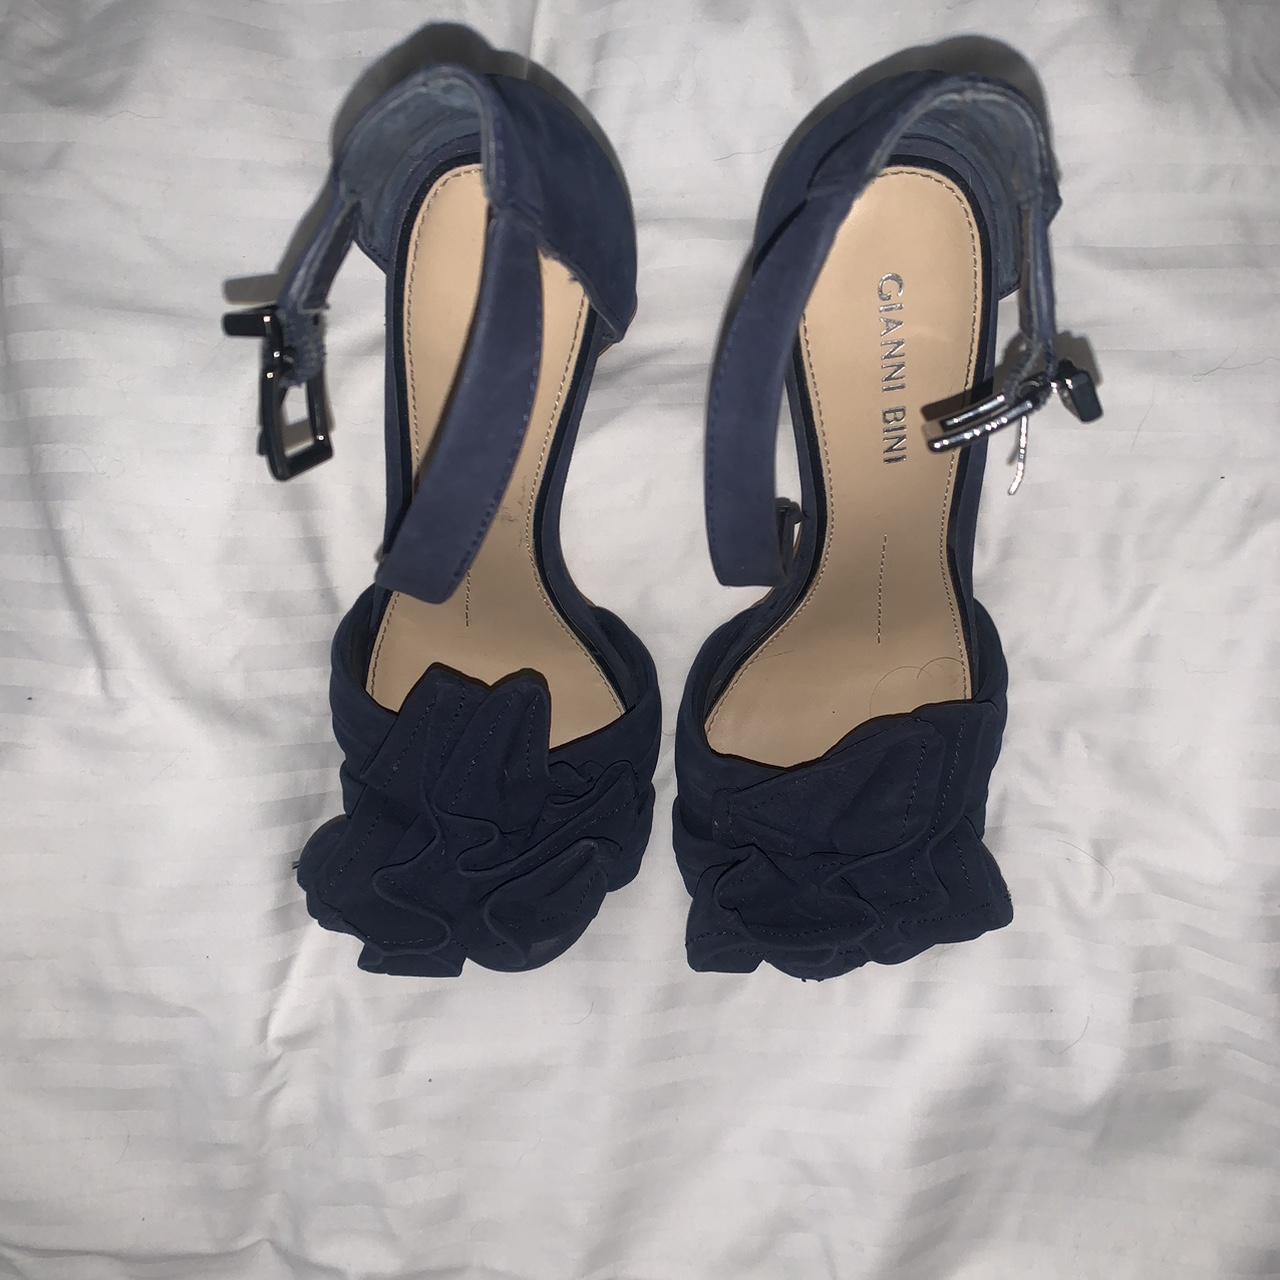 Giani Bernini Women's Navy and Blue Sandals